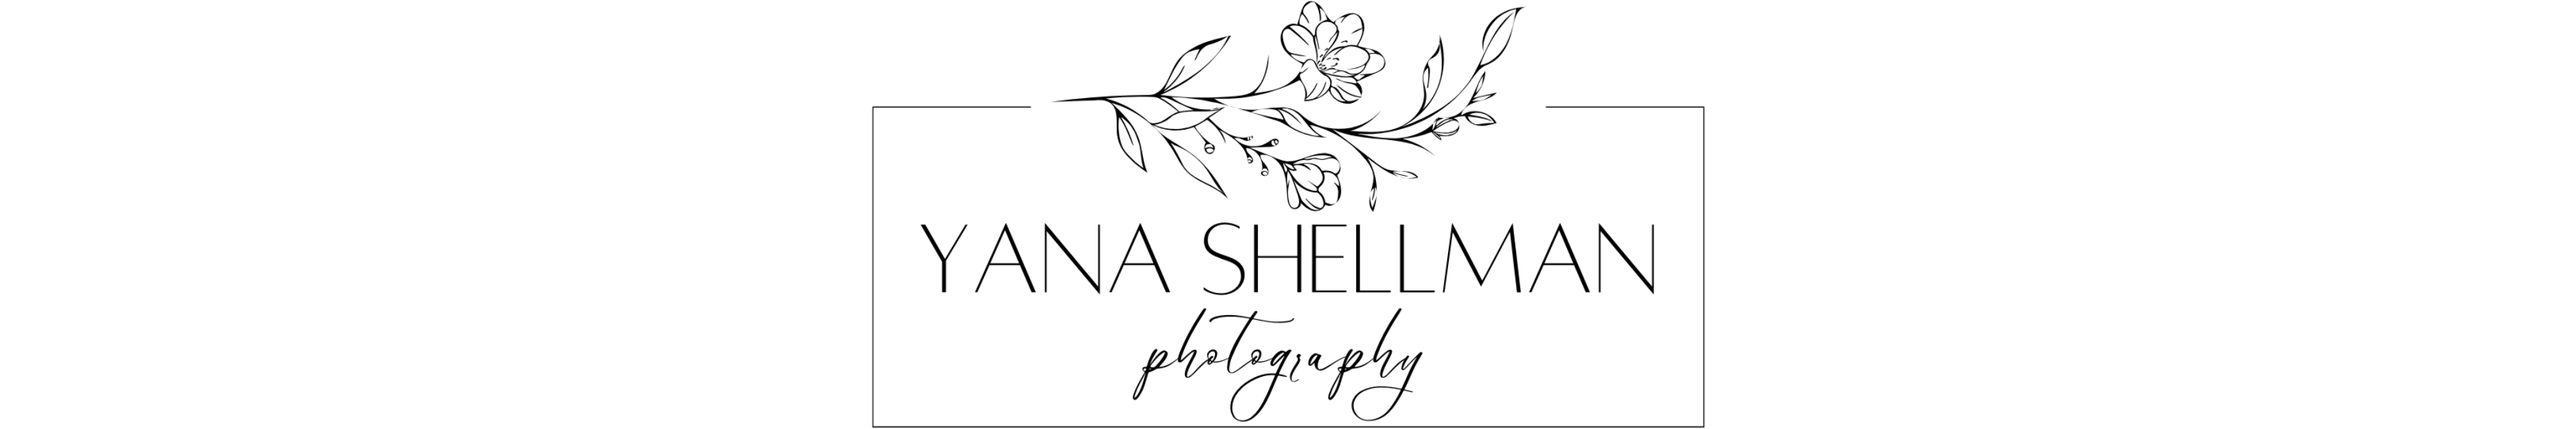 Philadelphia & South Jersey Wedding Photography – Yana Shellman Photography :: New Jersey Wedding Photographer